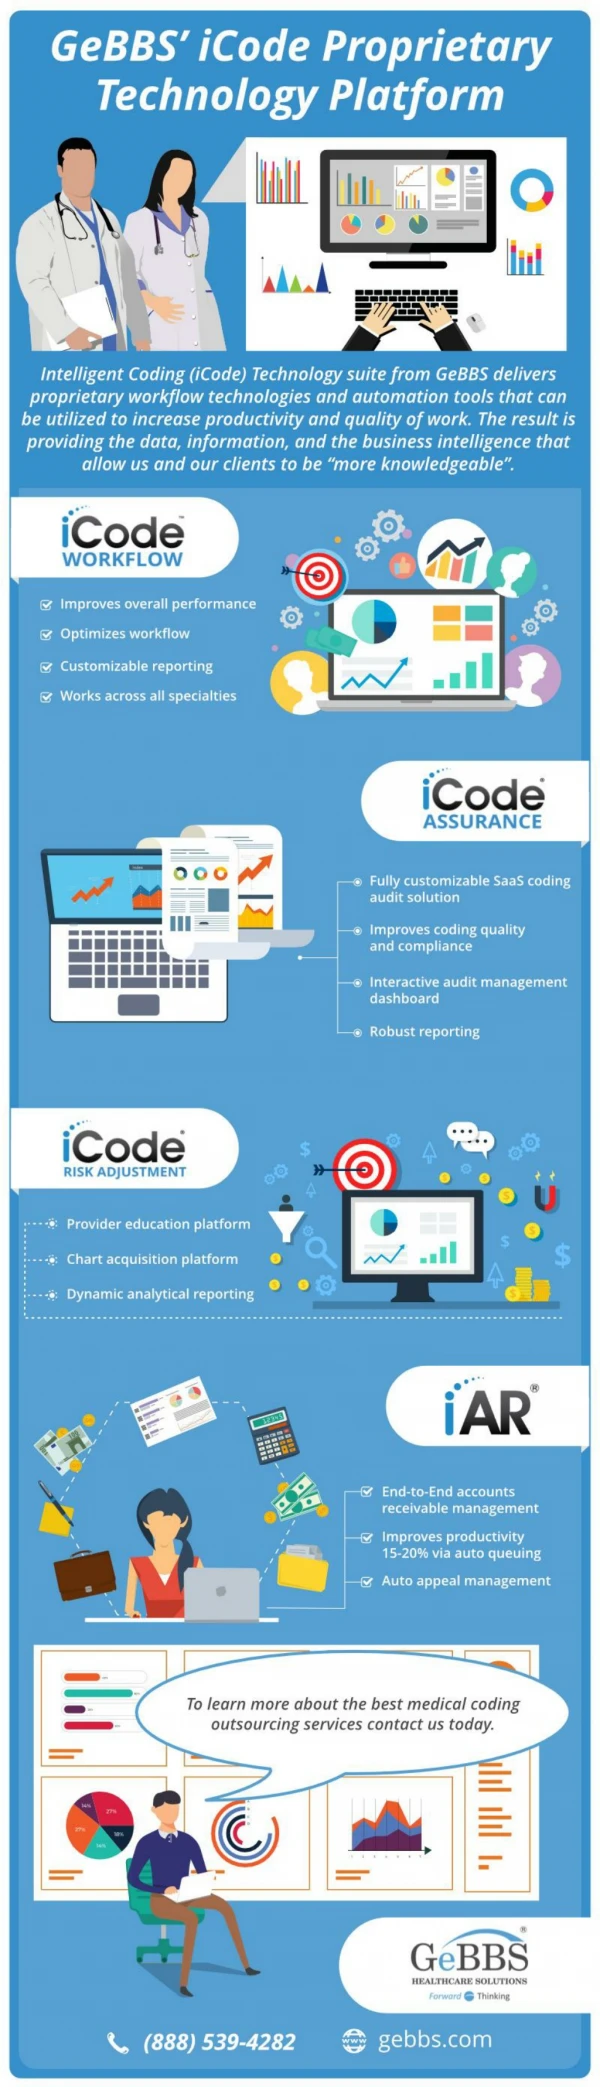 GeBBS' iCode Proprietary Technology Platform